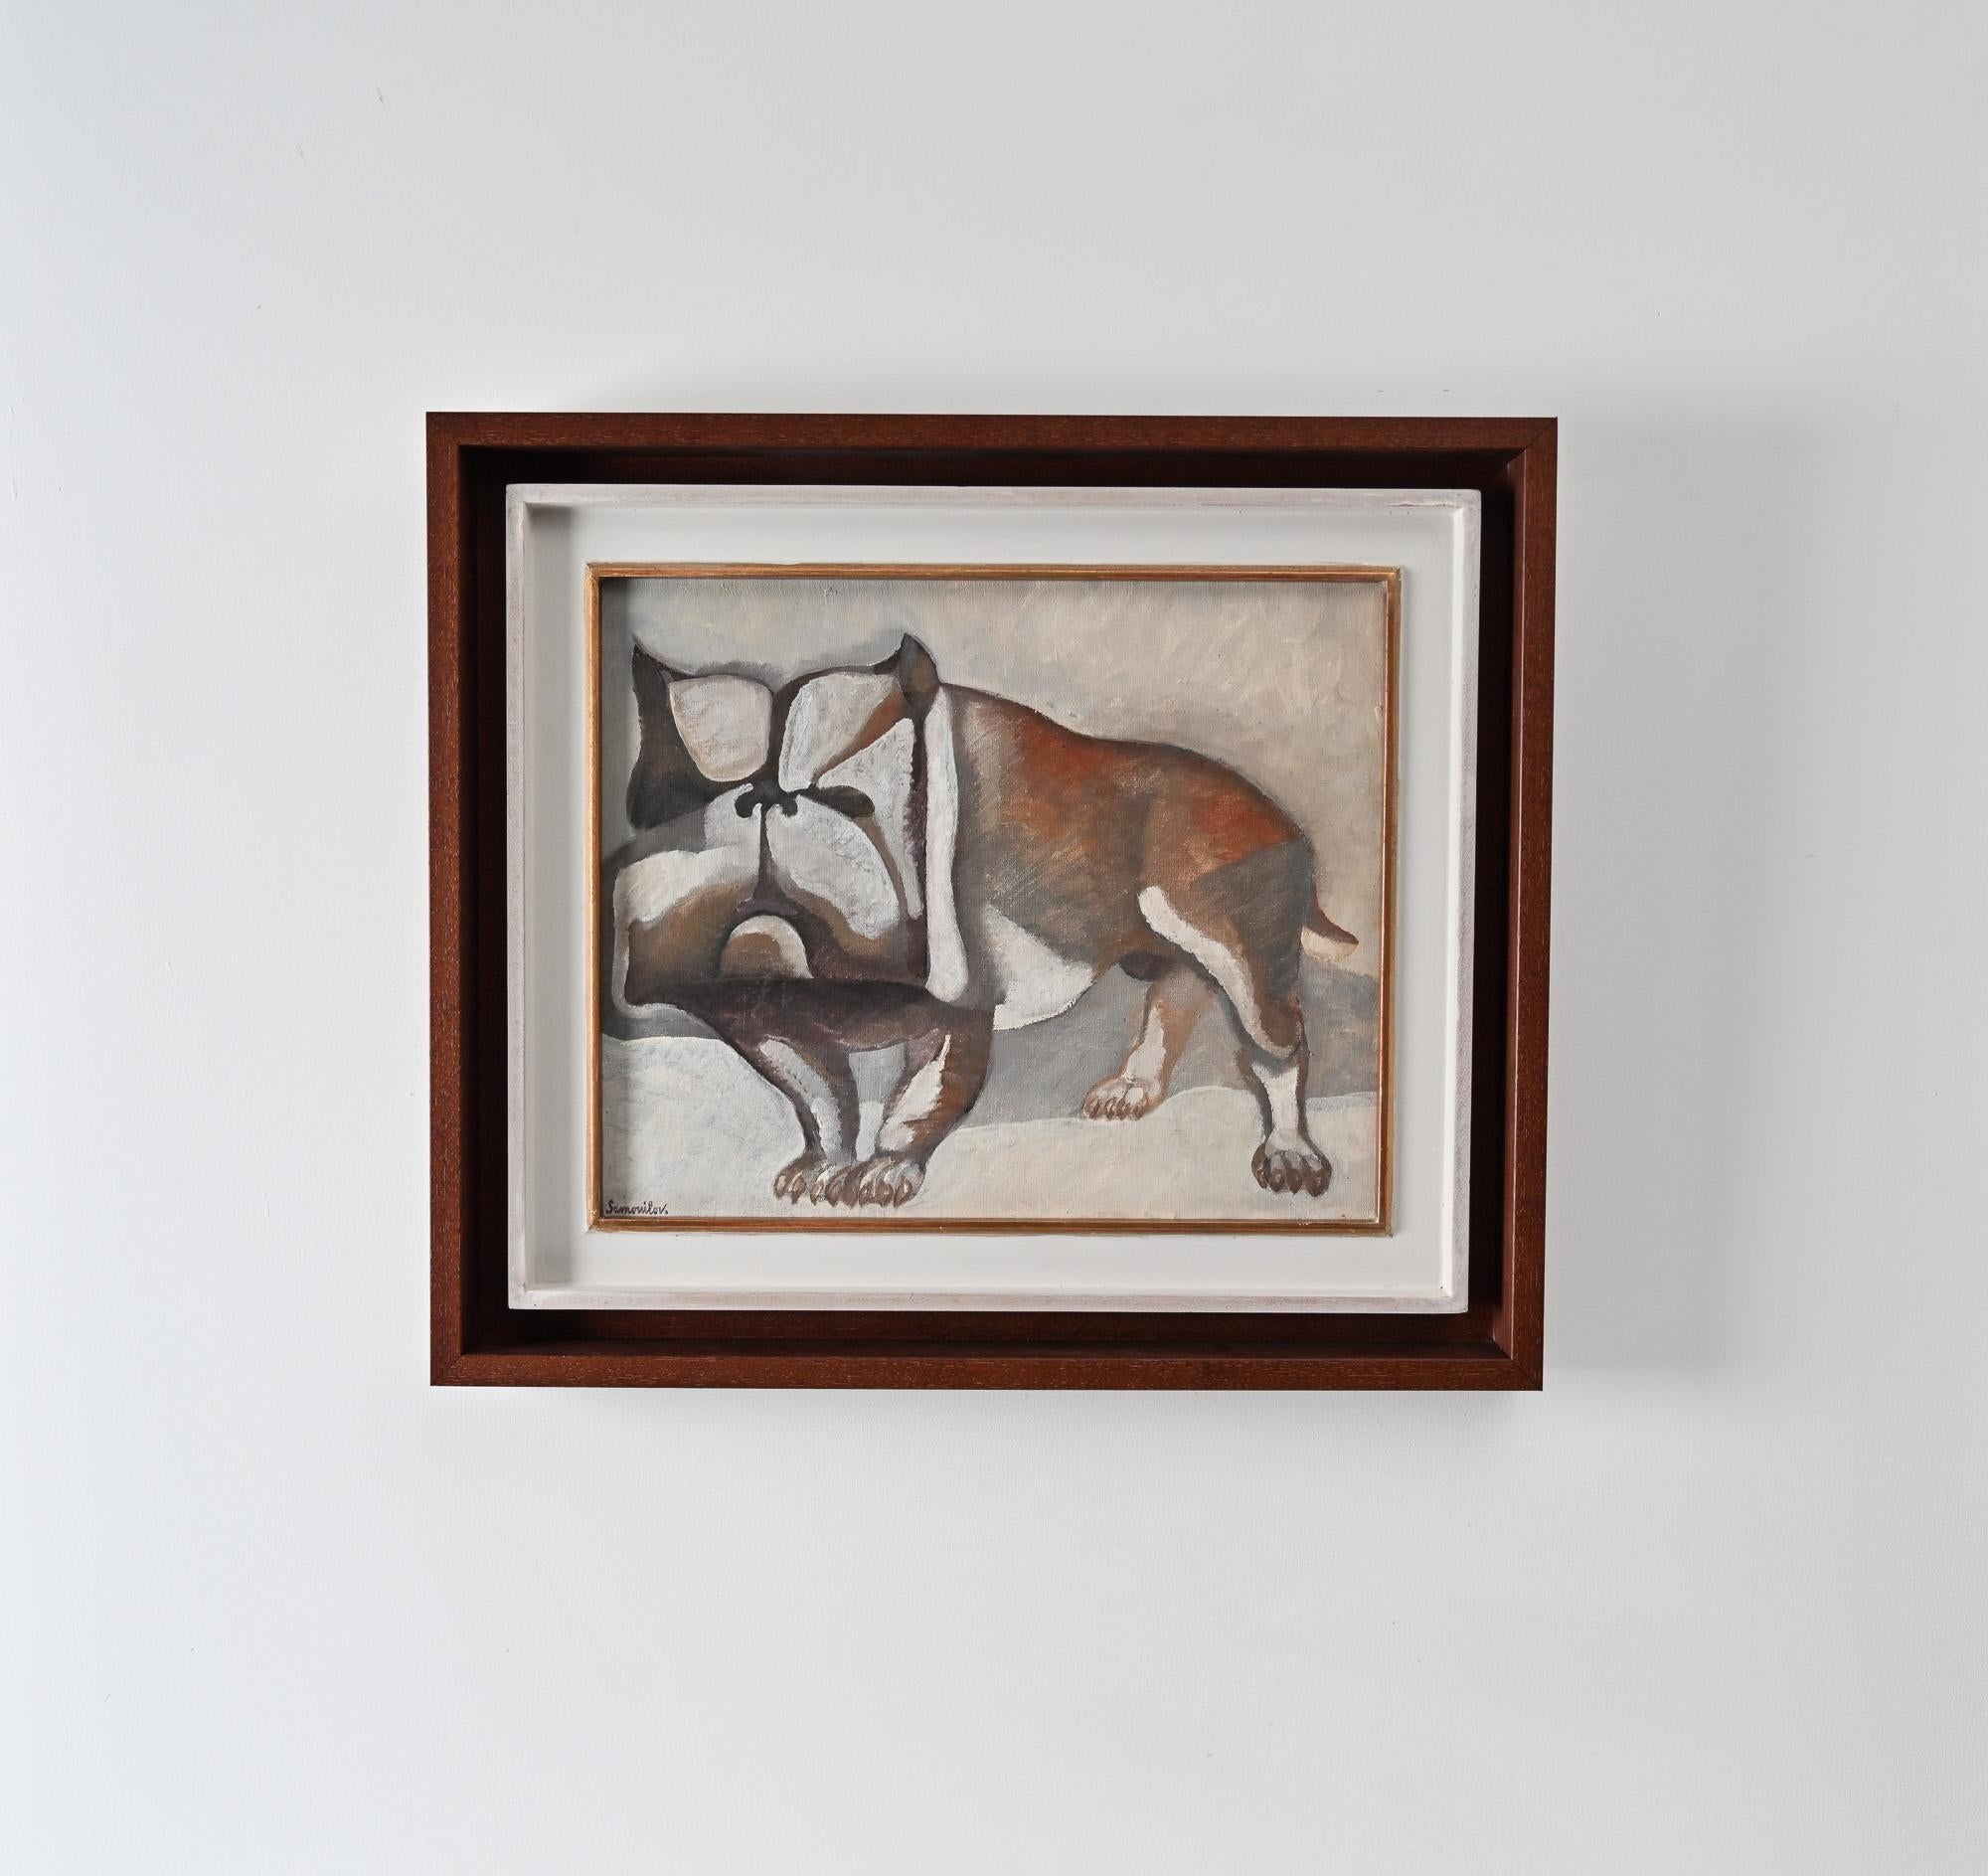 Oil on canvas of a bulldog by Parisian artist Henri Samouilov (1930-2014)

France circa 1960-70

Provenance: Atelier Henri Samouilov

Framed 63cm w x 54.5cm h x 5.5cm d Canvas size 46cm w x 38cm h

HENRI SAMOUILOV (1930-2014)

Born on December 25,